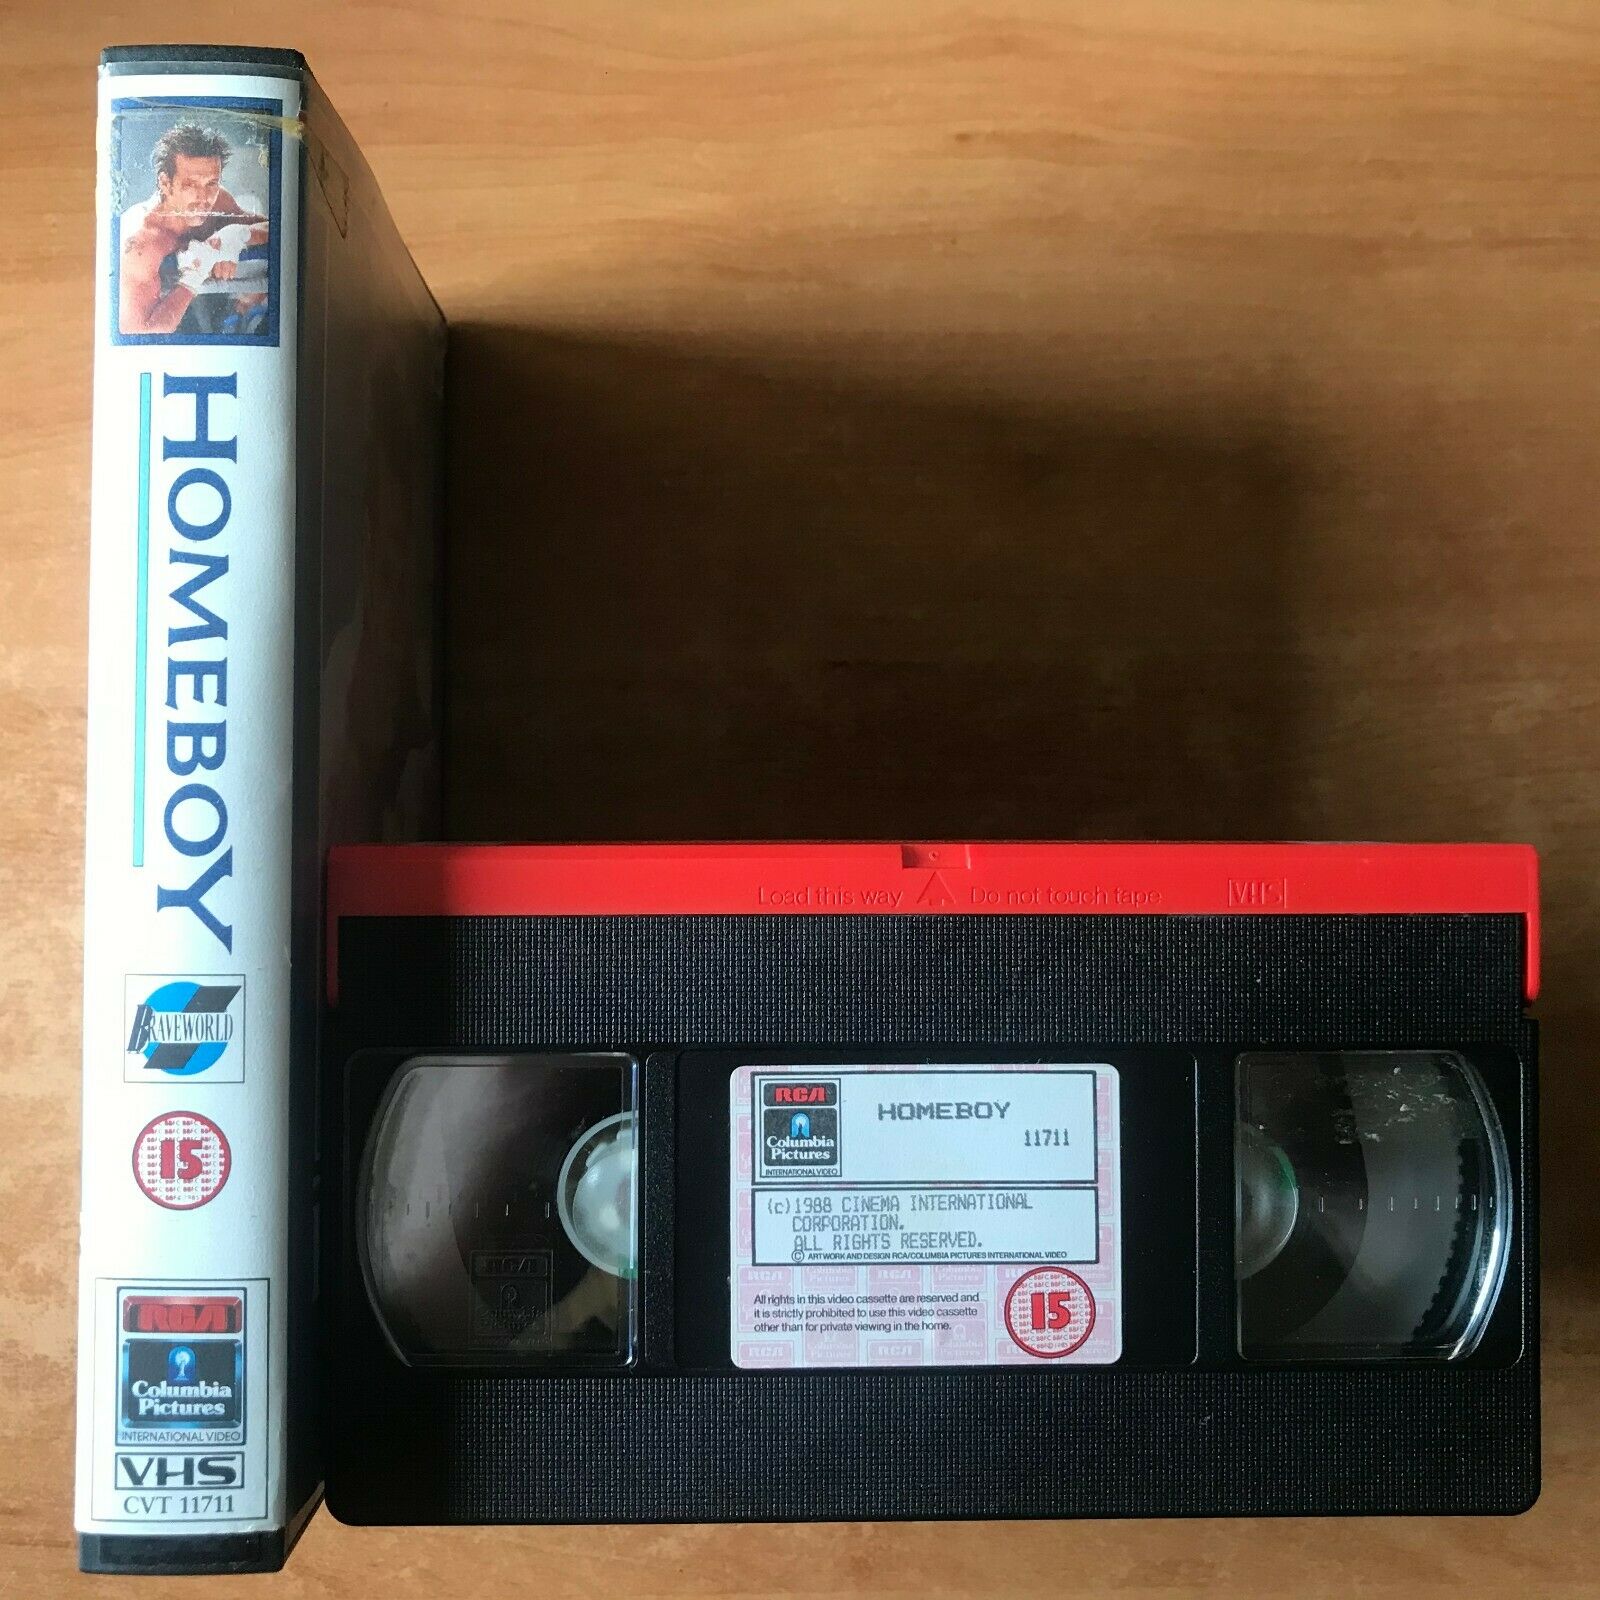 Homeboy: Boxing Drama; [Large Box] Mickey Rourke / Christopher Walken - Pal VHS-